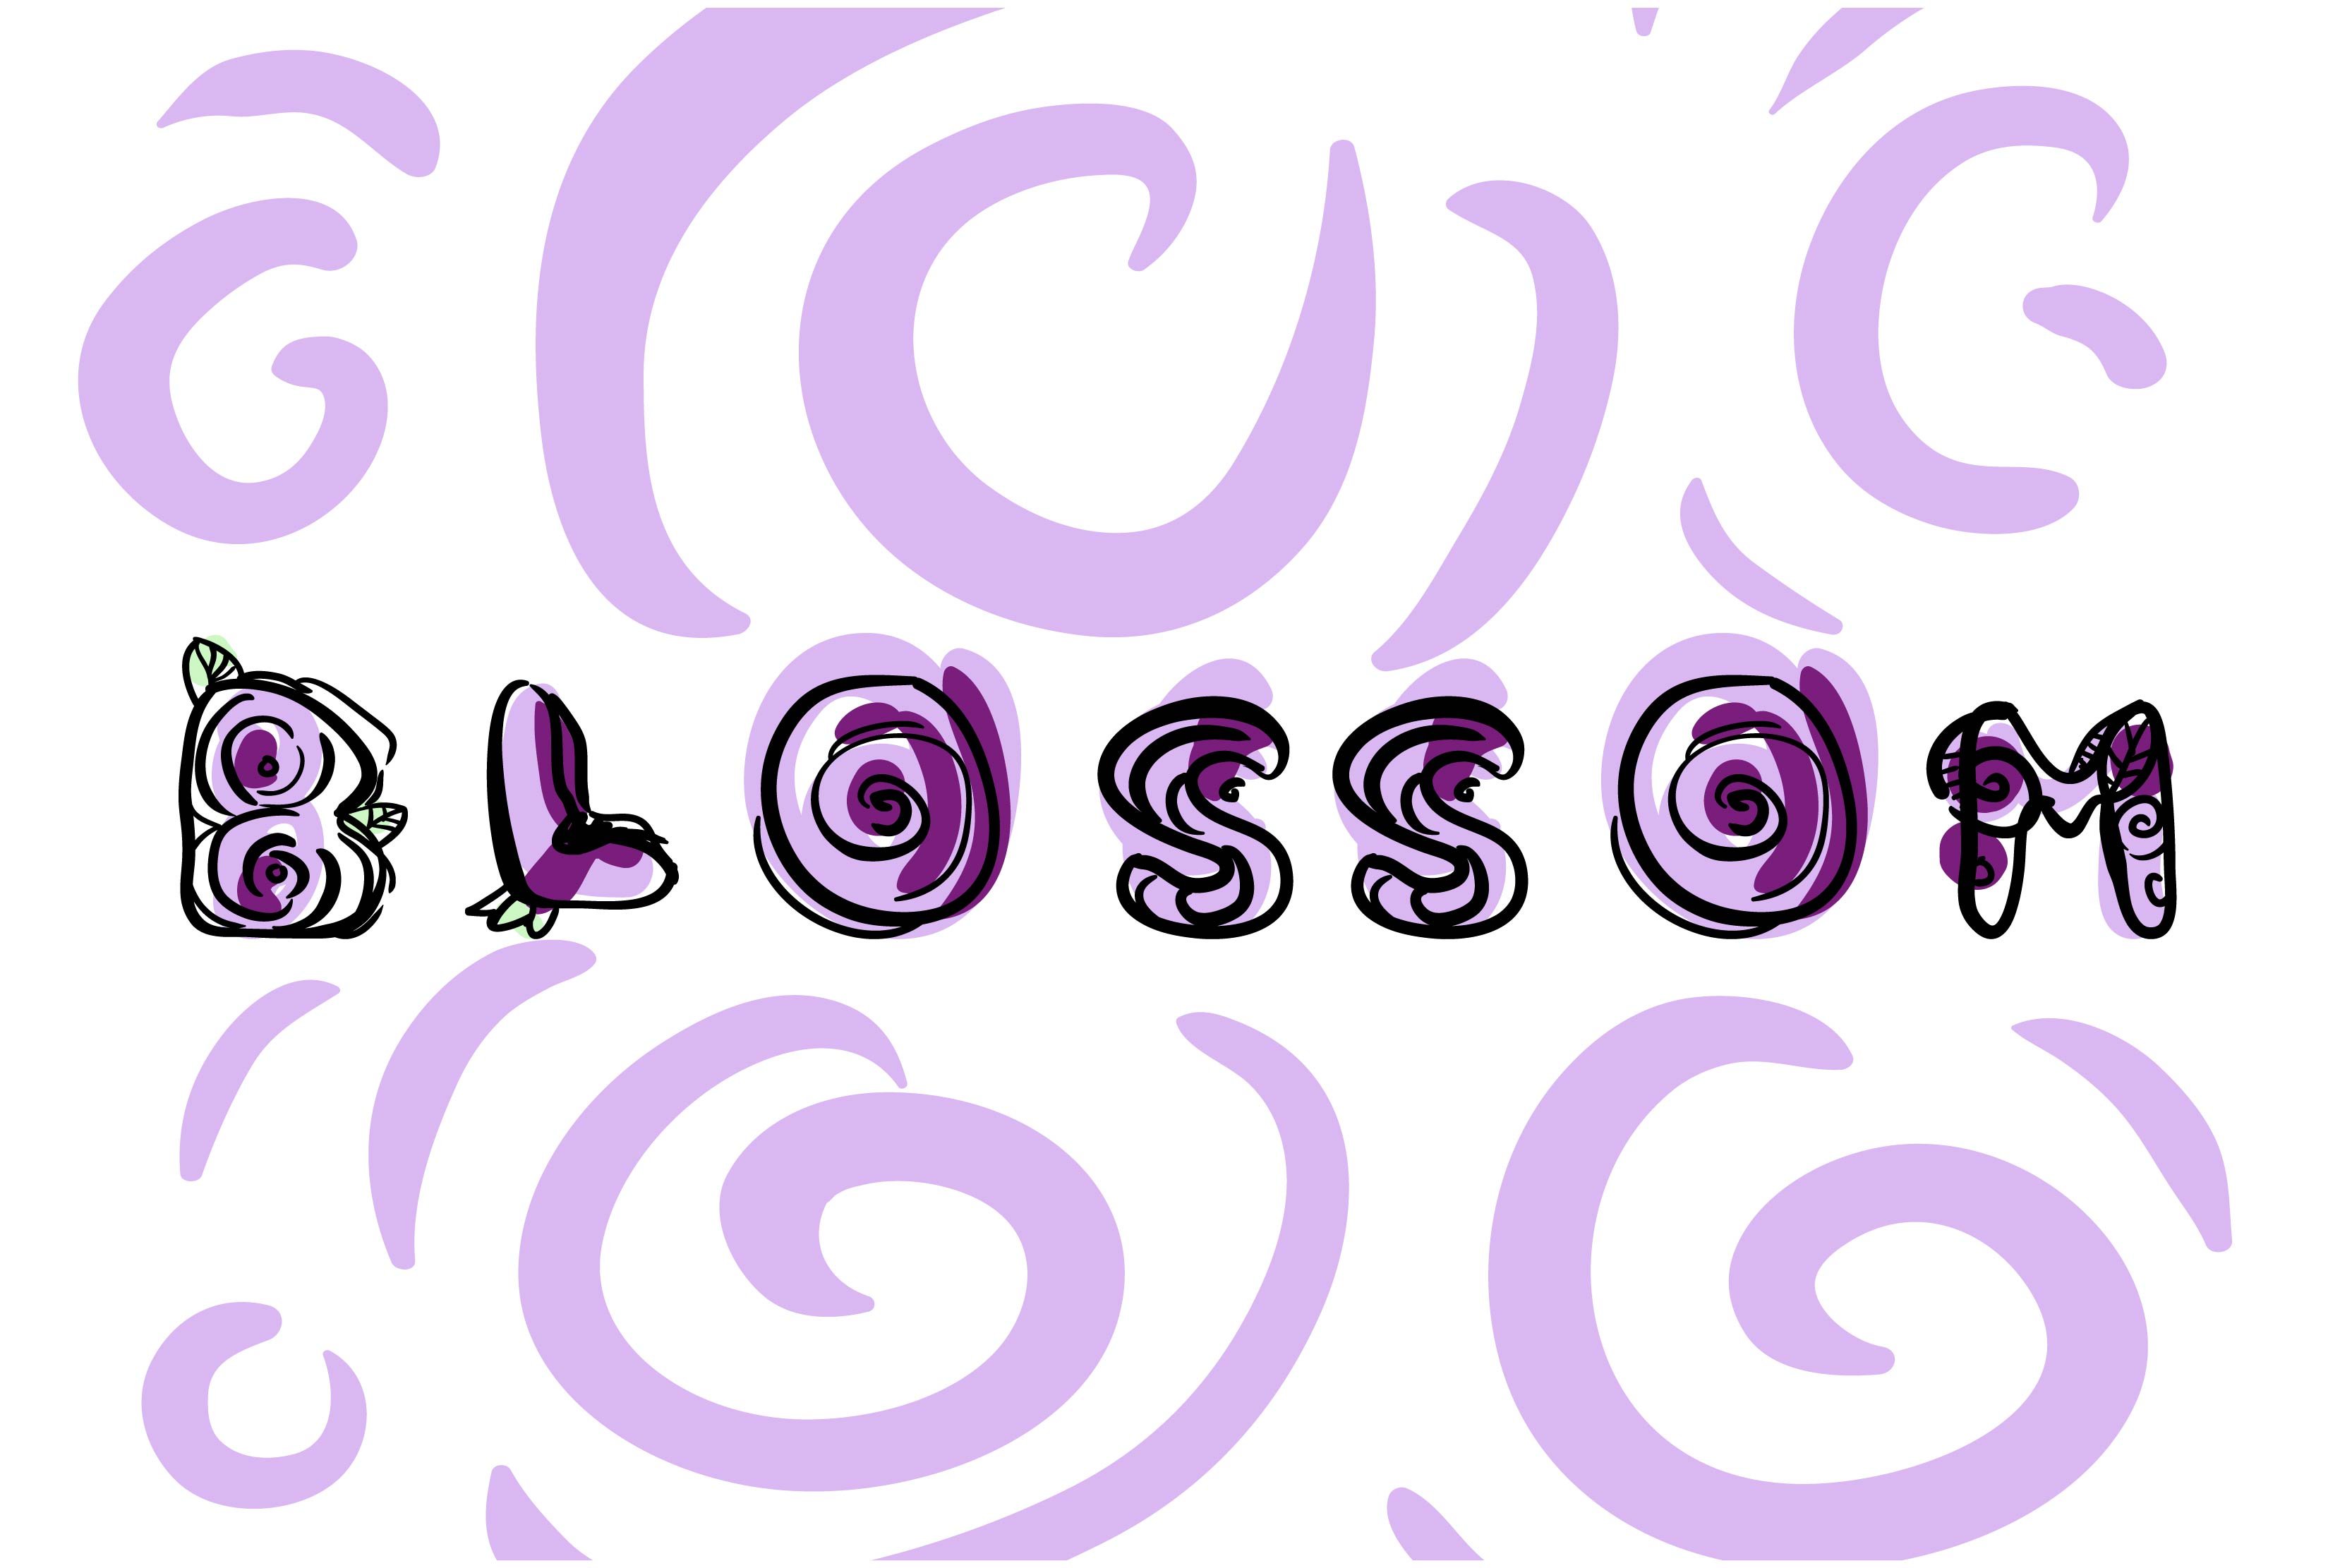 Blossom font cover image.